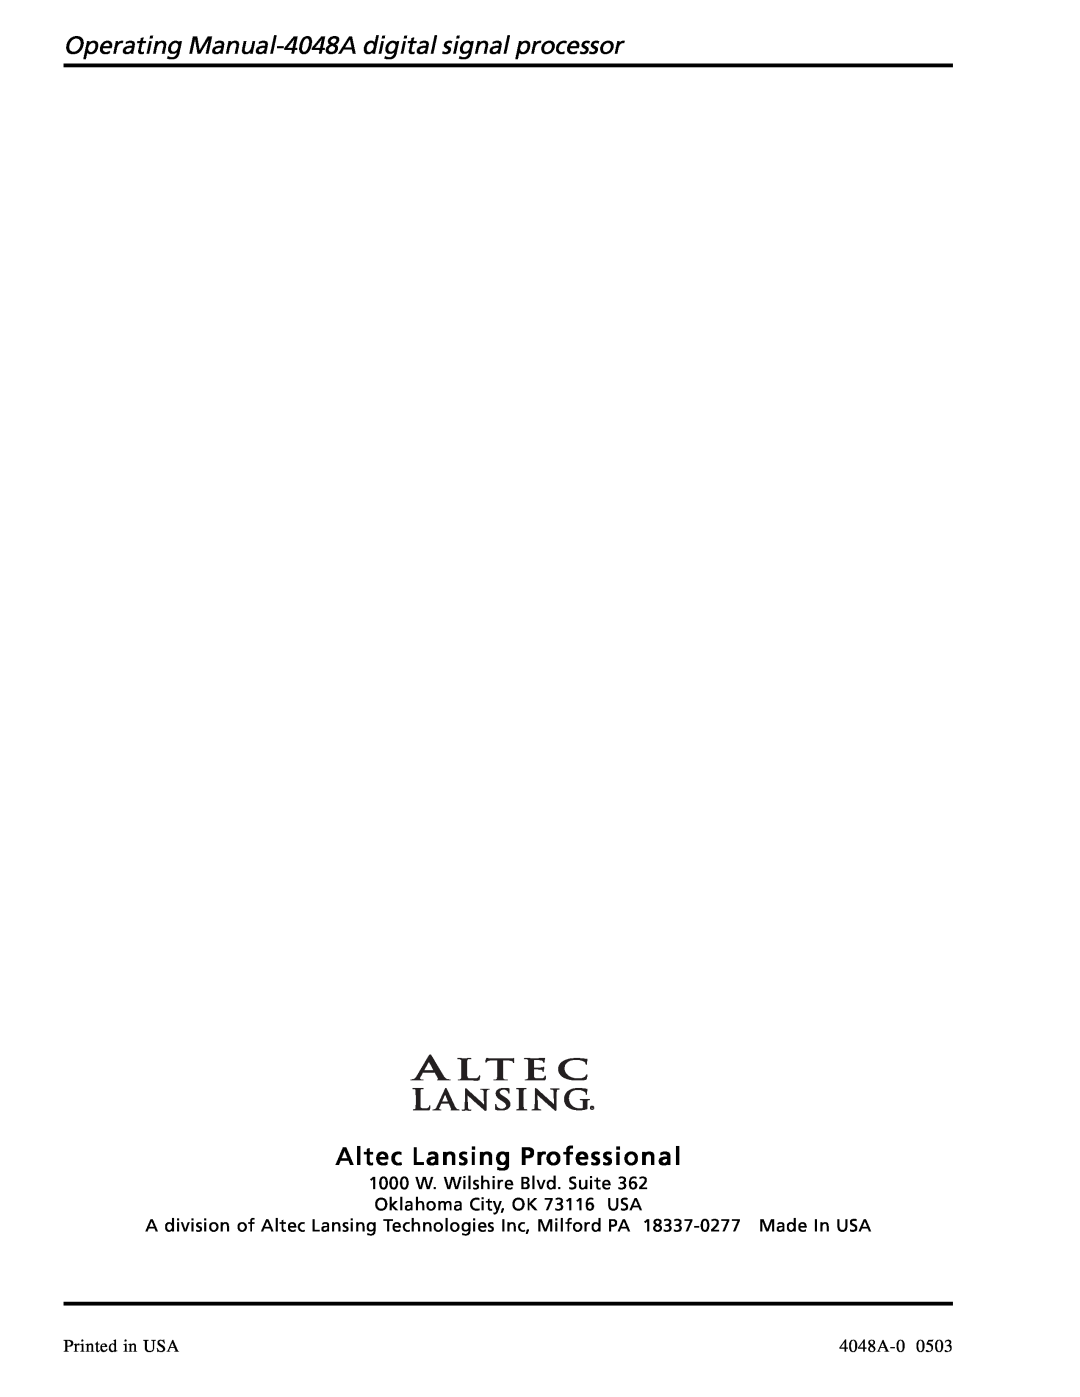 Altec Lansing Operating Manual-4048A digital signal processor, Altec Lansing Professional, Printed in USA, 4048A-0 